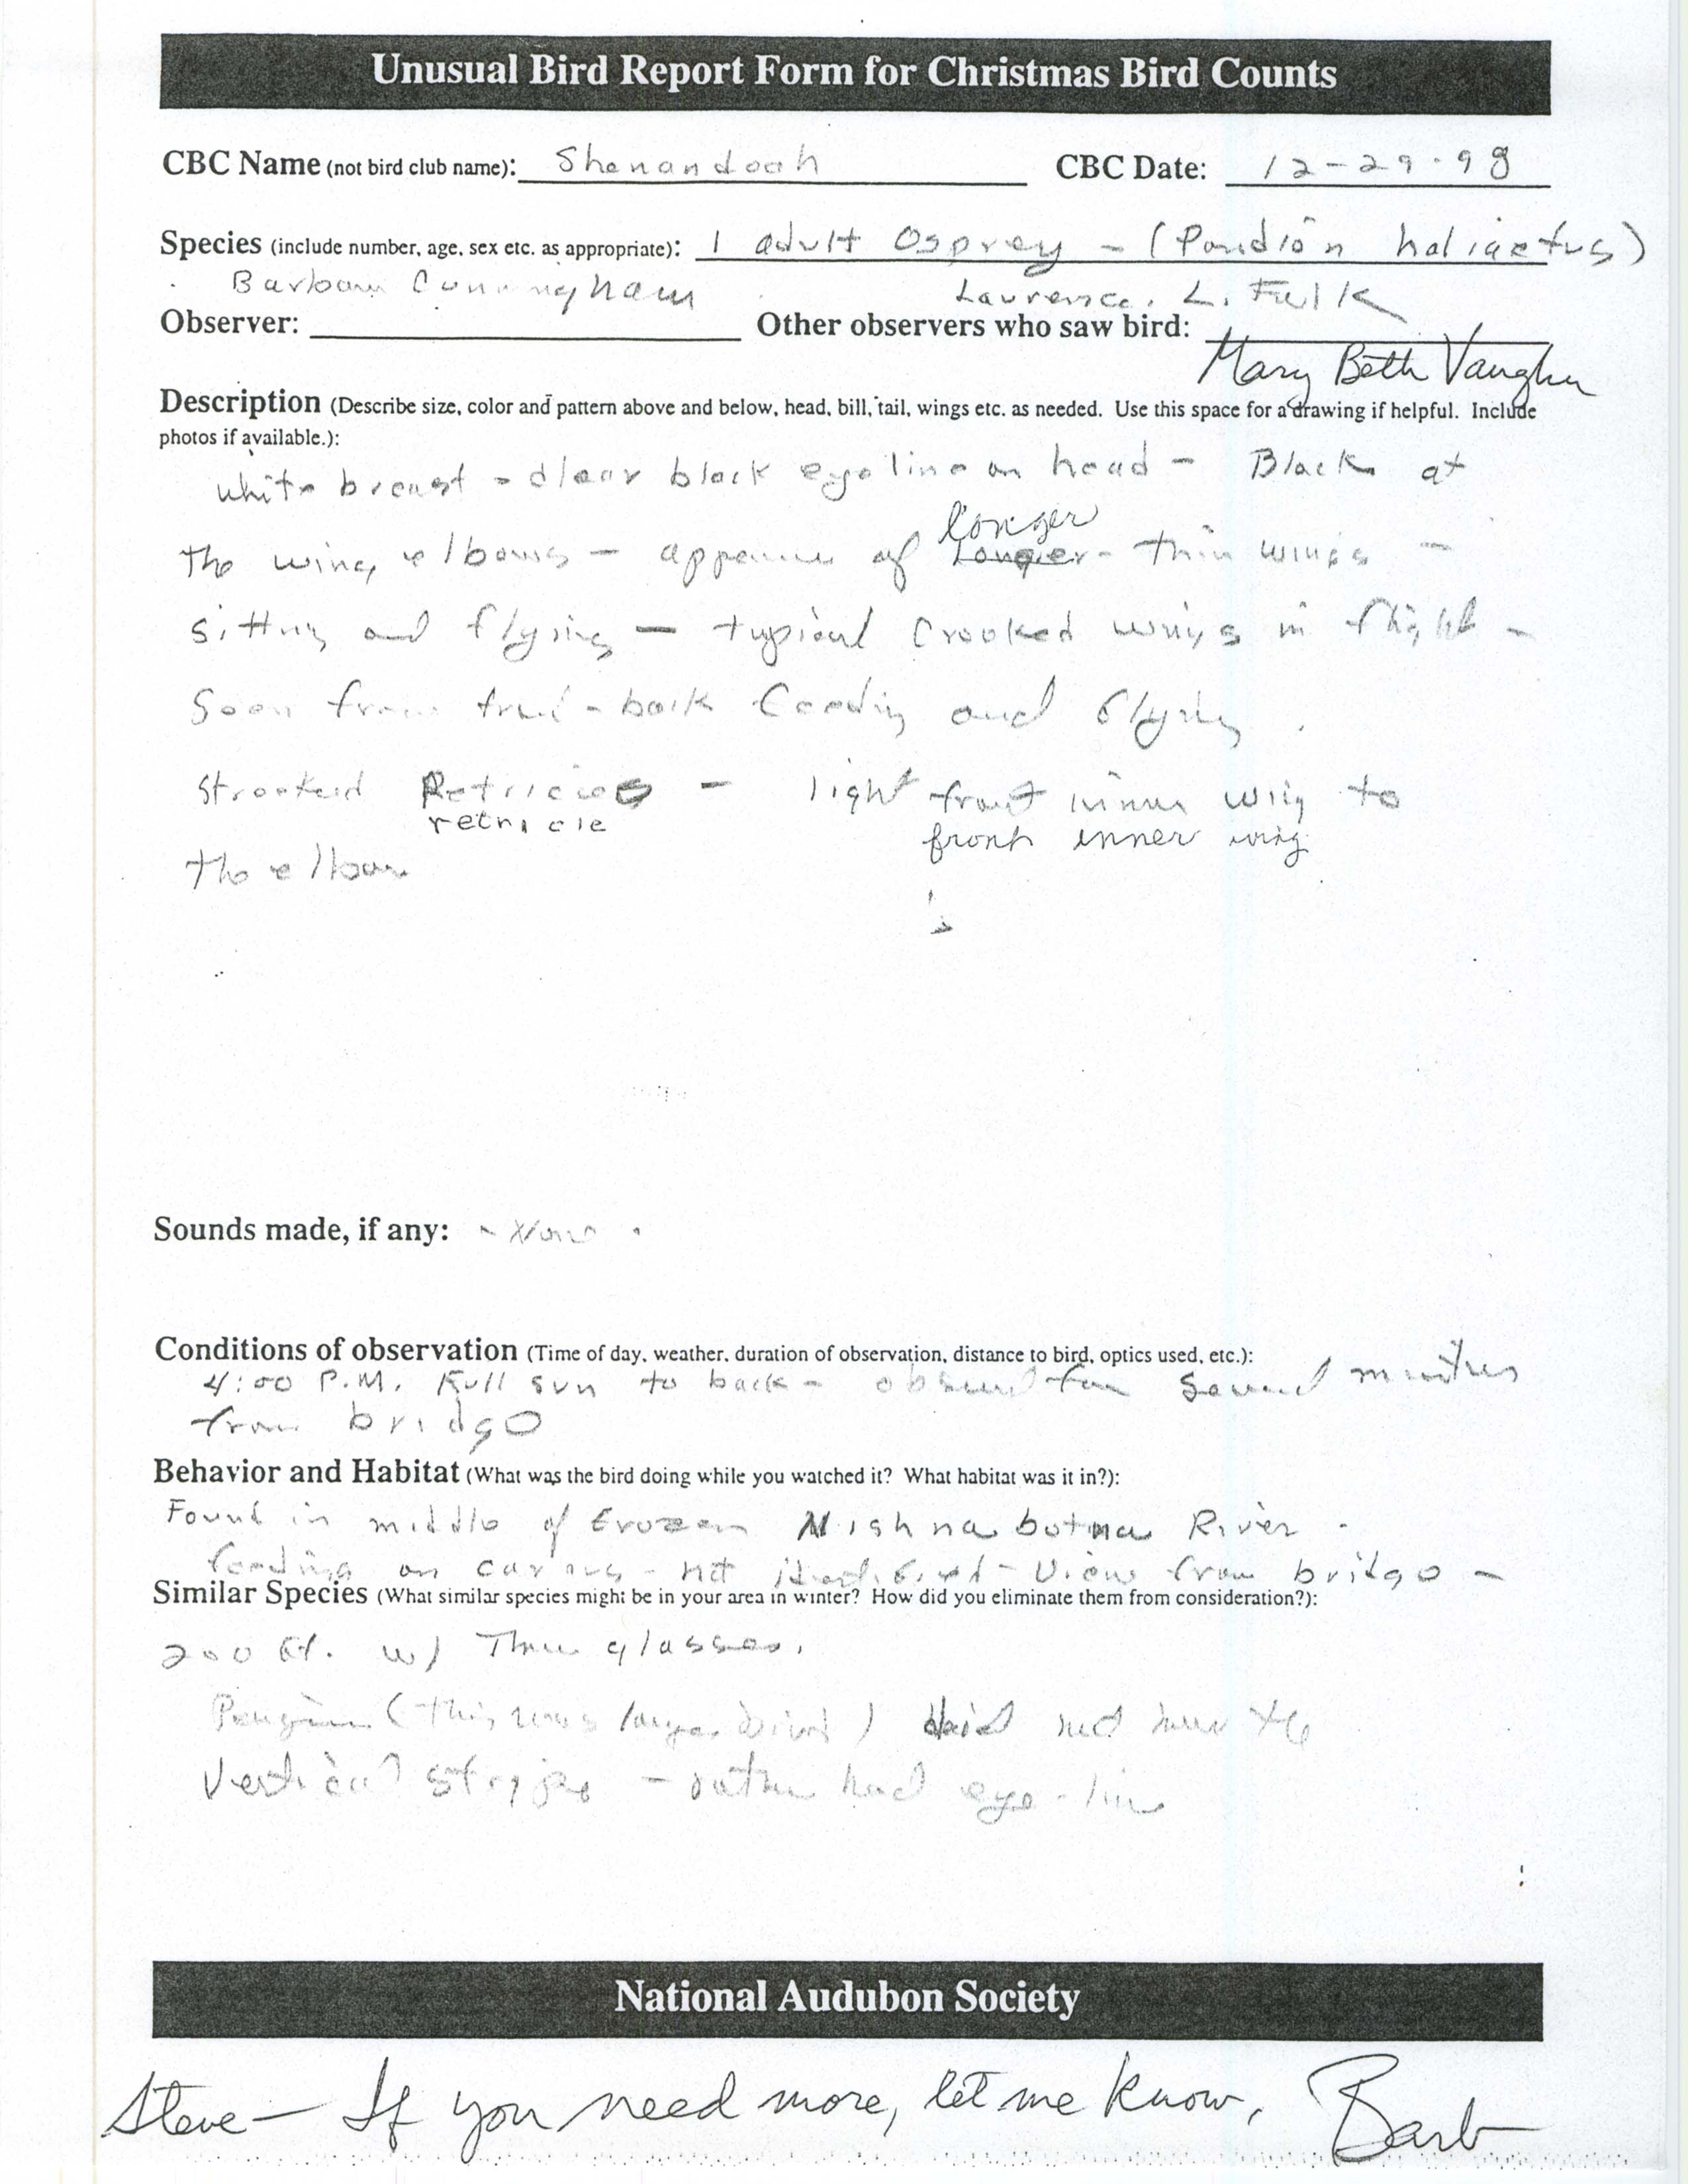 Unusual bird report form for an Osprey at Shenandoah, December 29, 1998